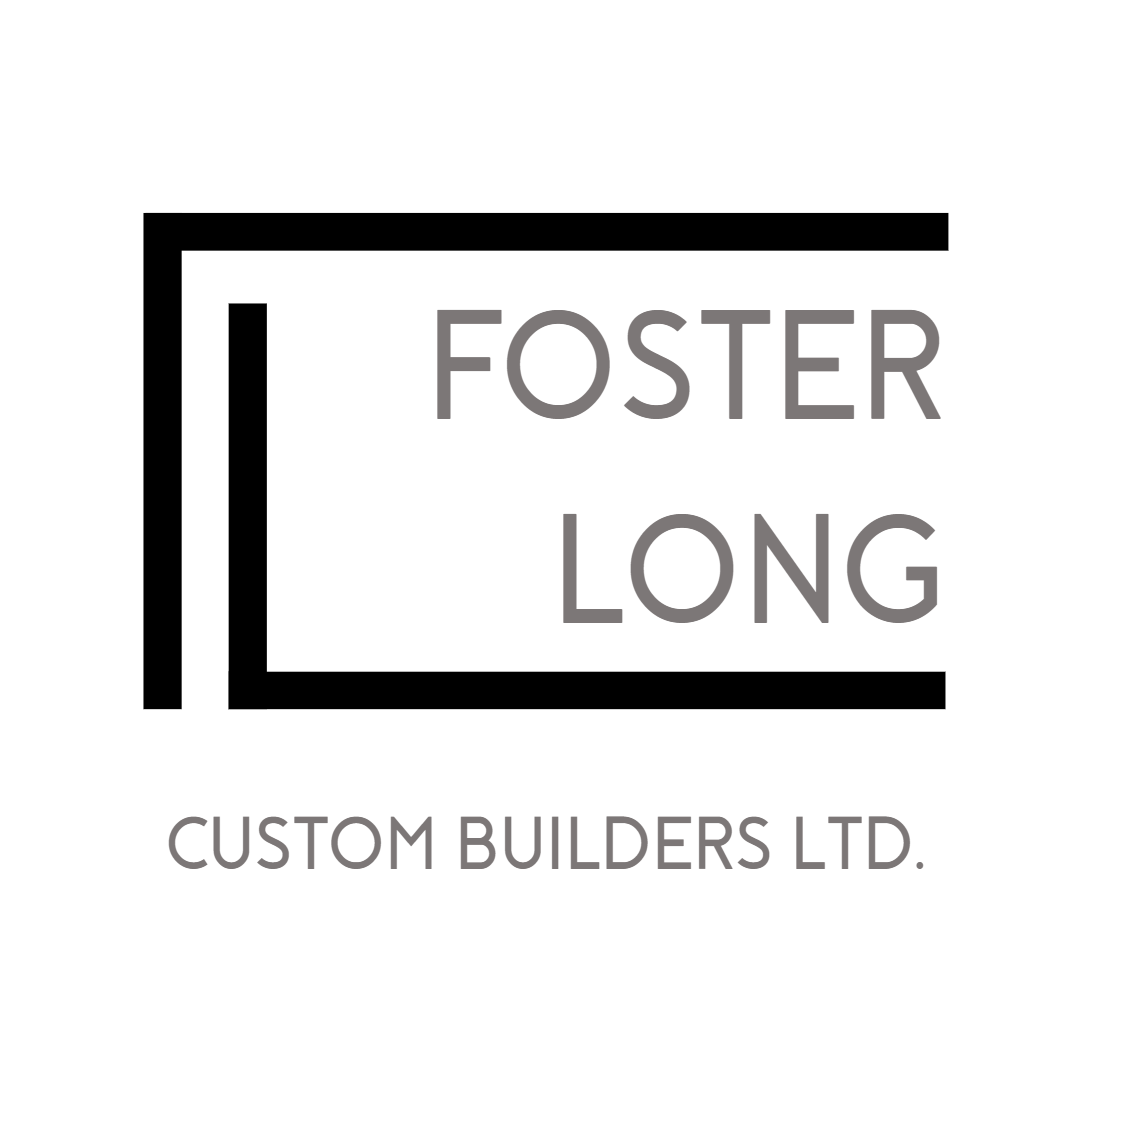 Foster-Long Custom Builders Ltd.